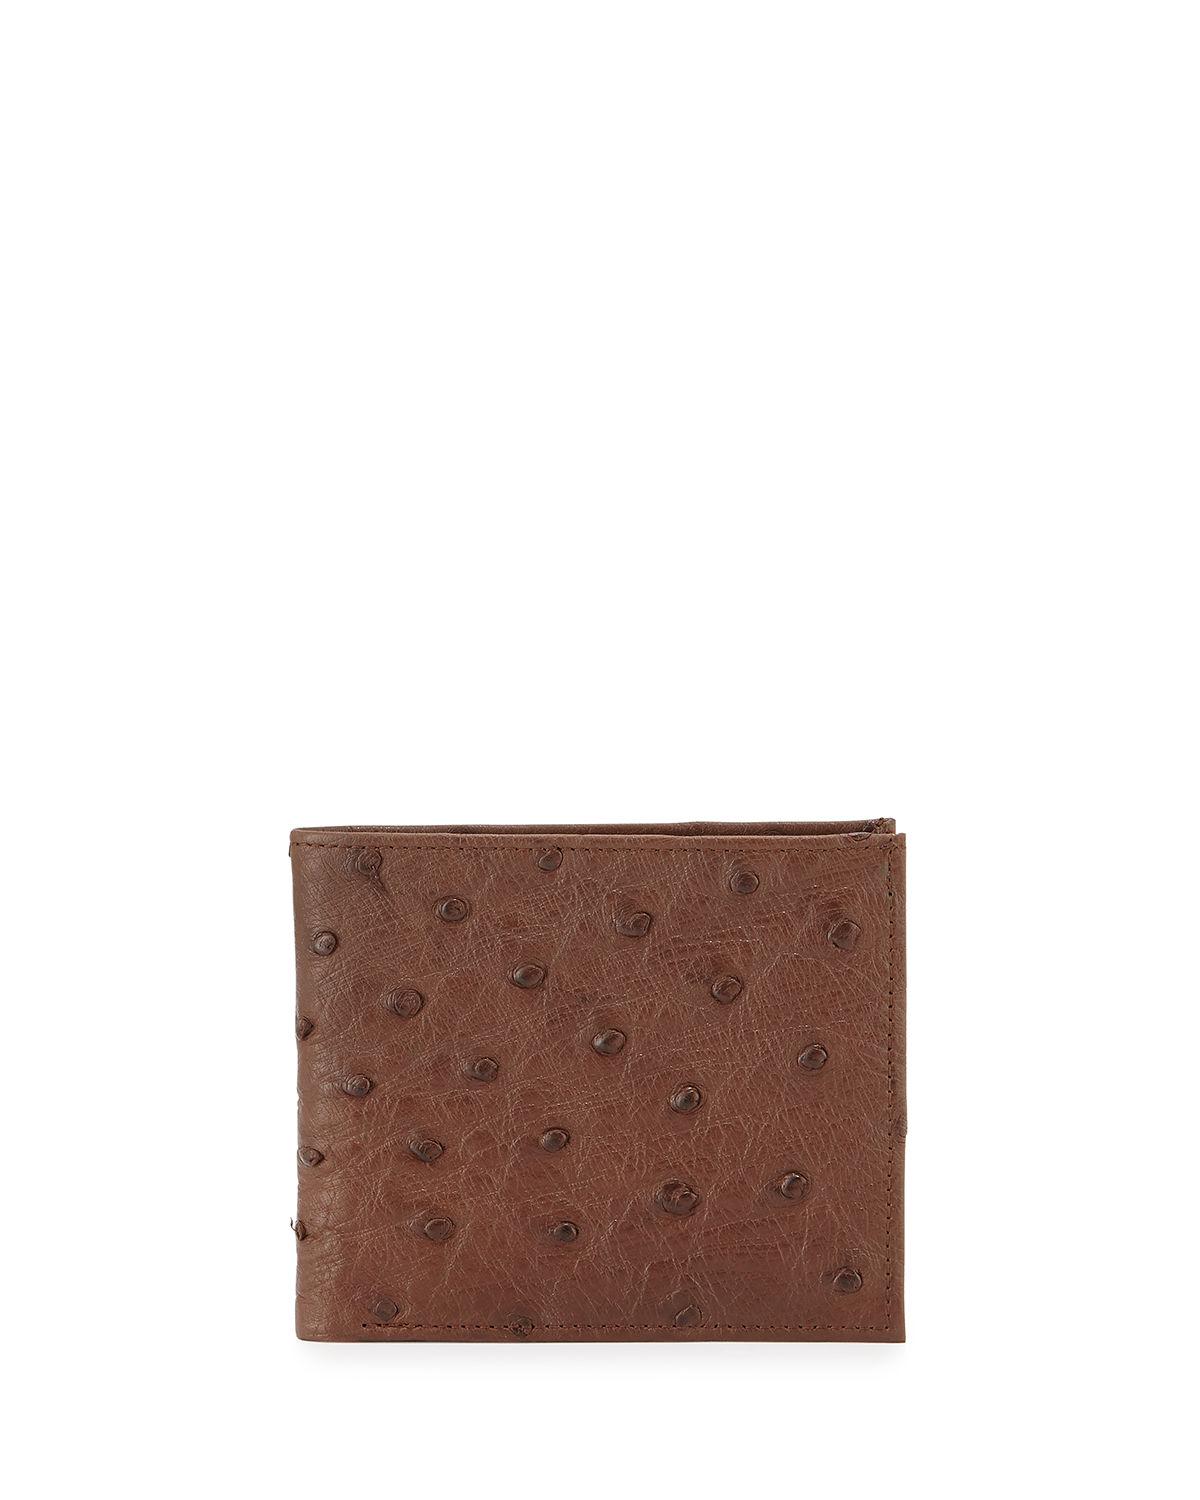 Neiman Marcus Ostrich Bi-fold Wallet in Brown for Men - Lyst